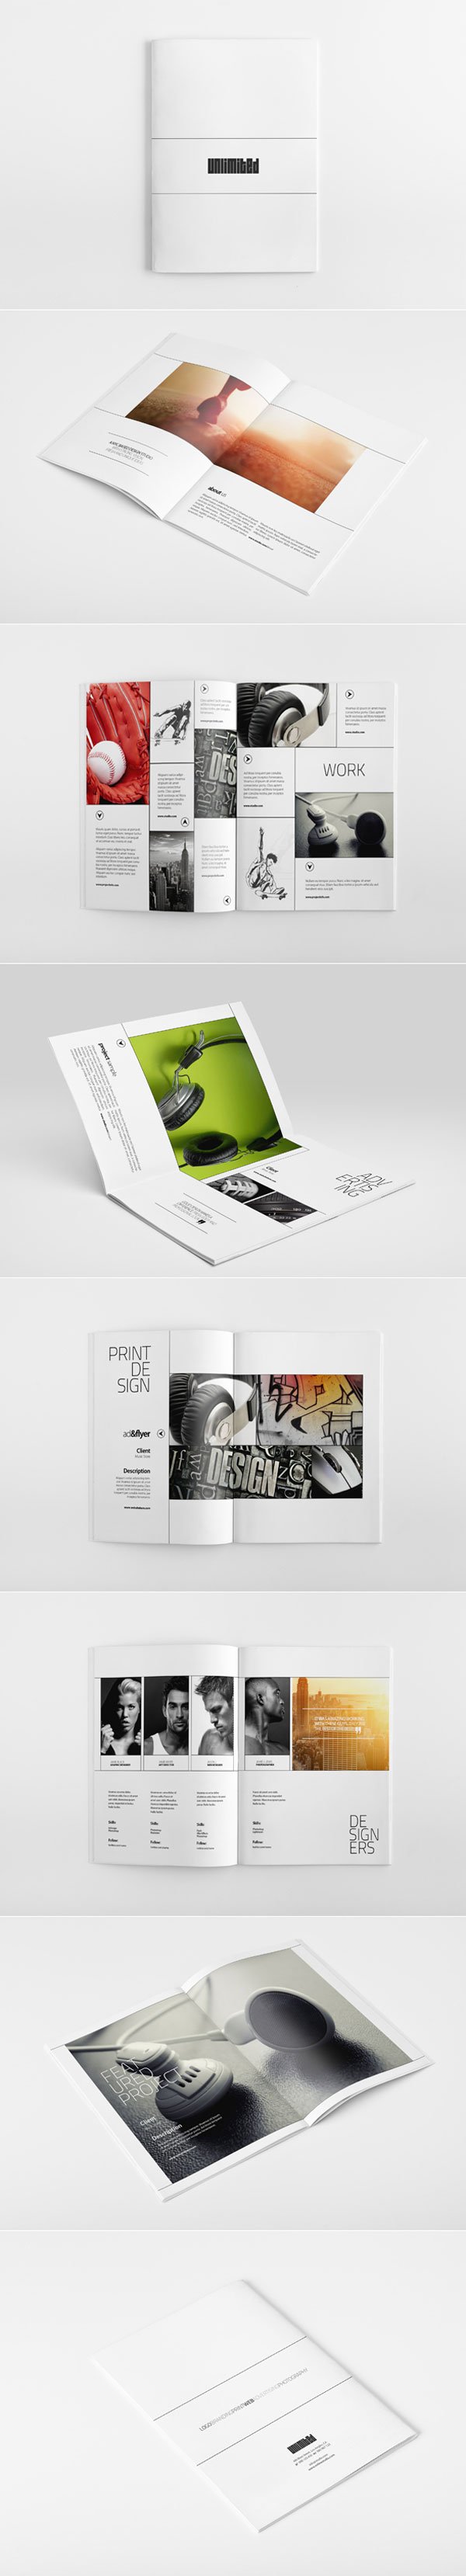 Simple Yet Beautiful Brochure Design Inspiration Templates